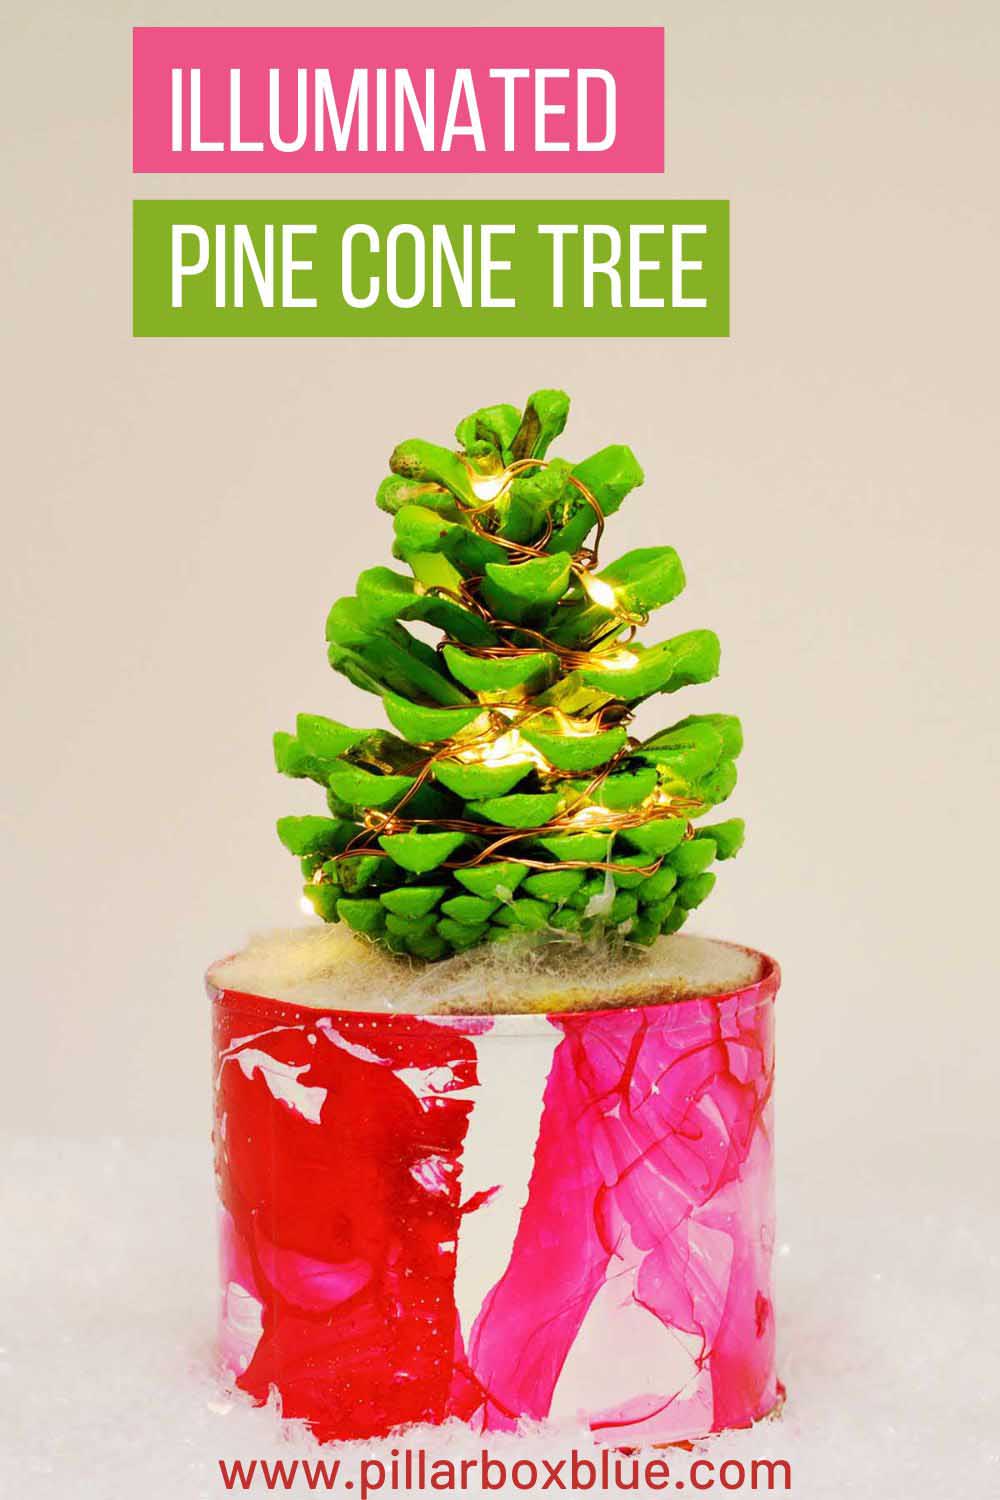 Illuminated Pine Cone Christmas Tree ornament